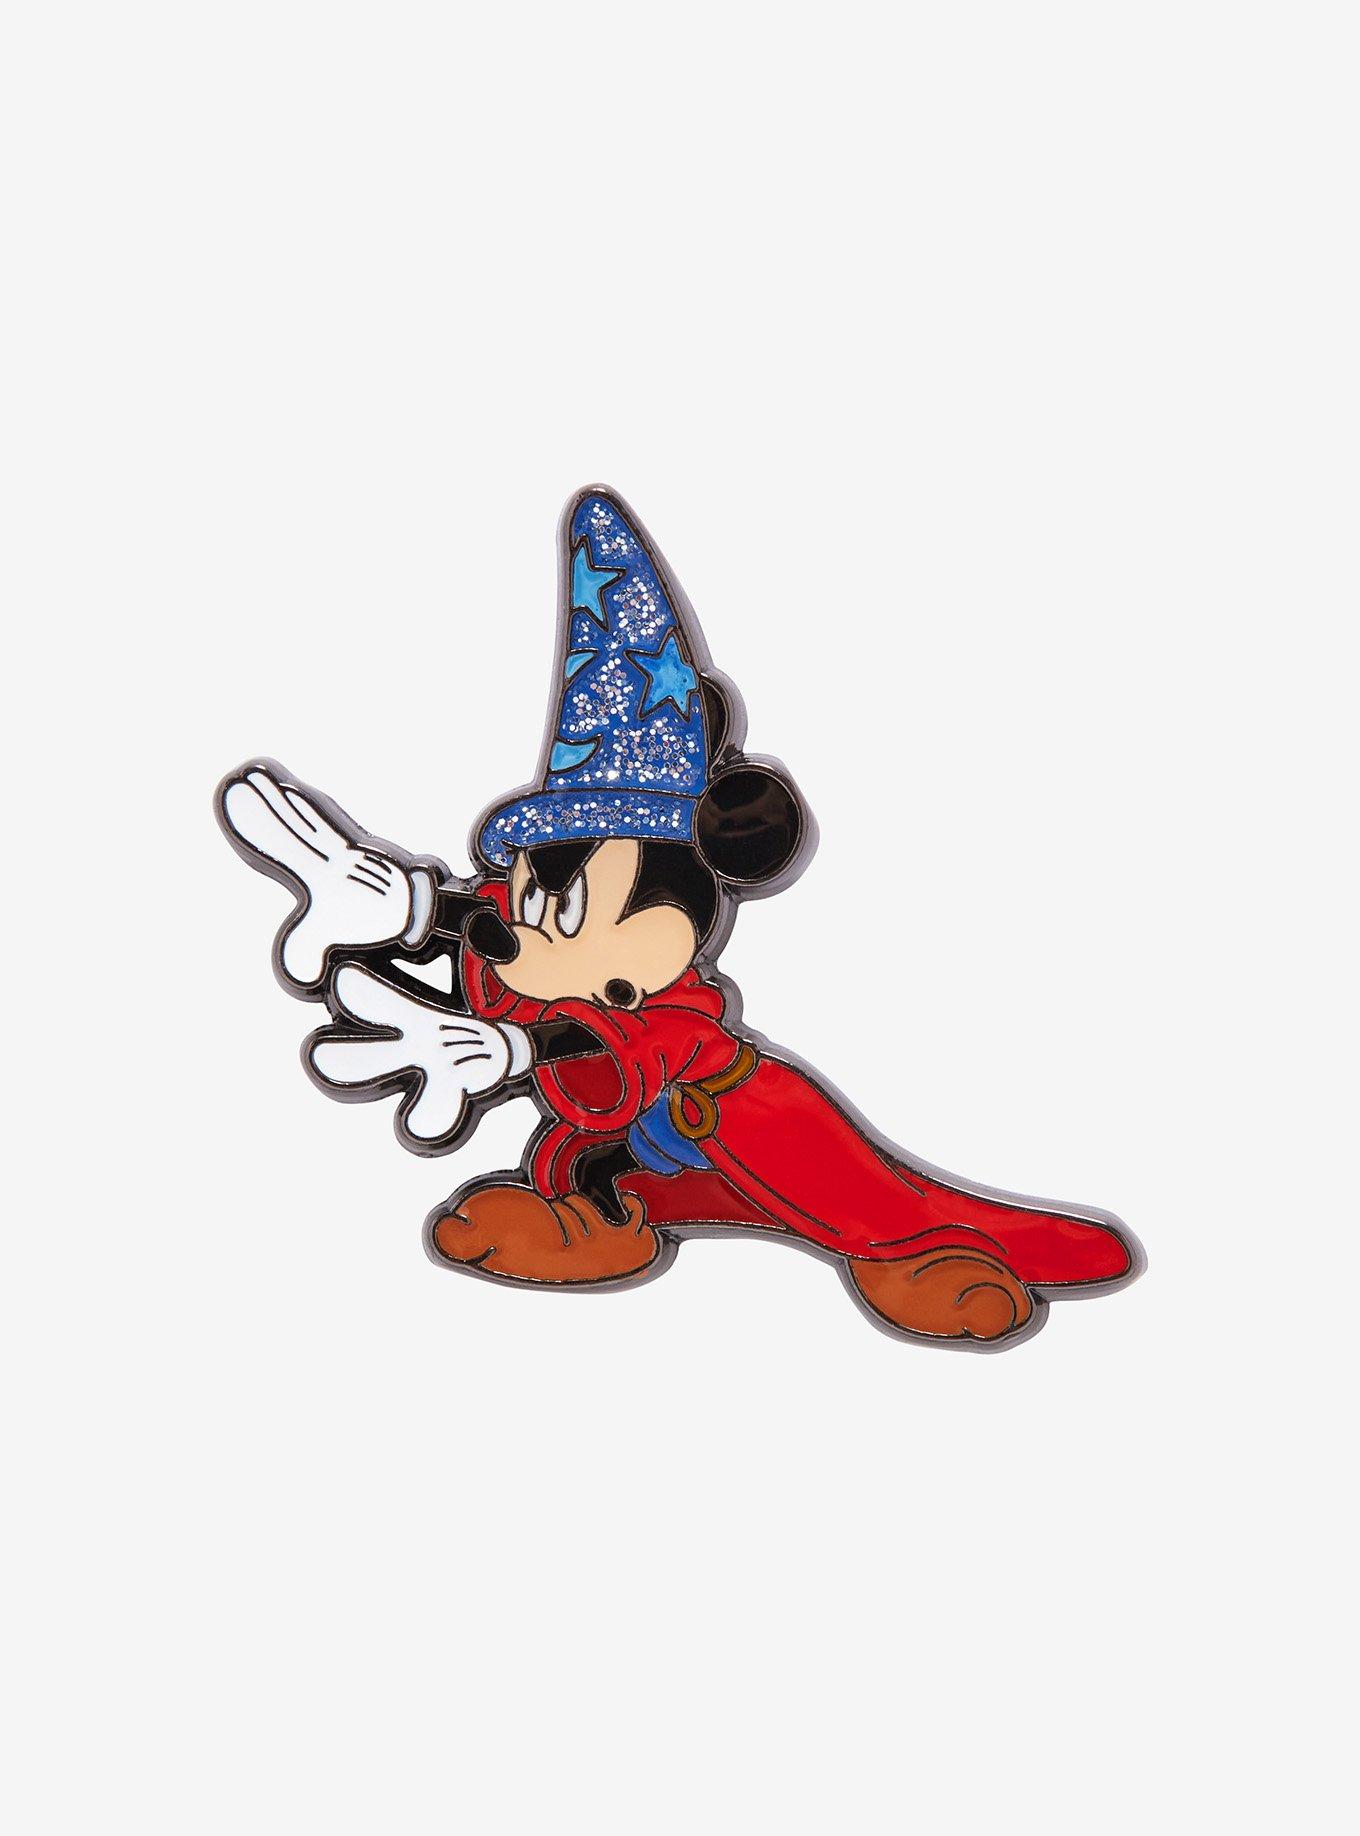 Disney Small Pin Bag - 2016 Logo - Sorcerer Mickey Mouse